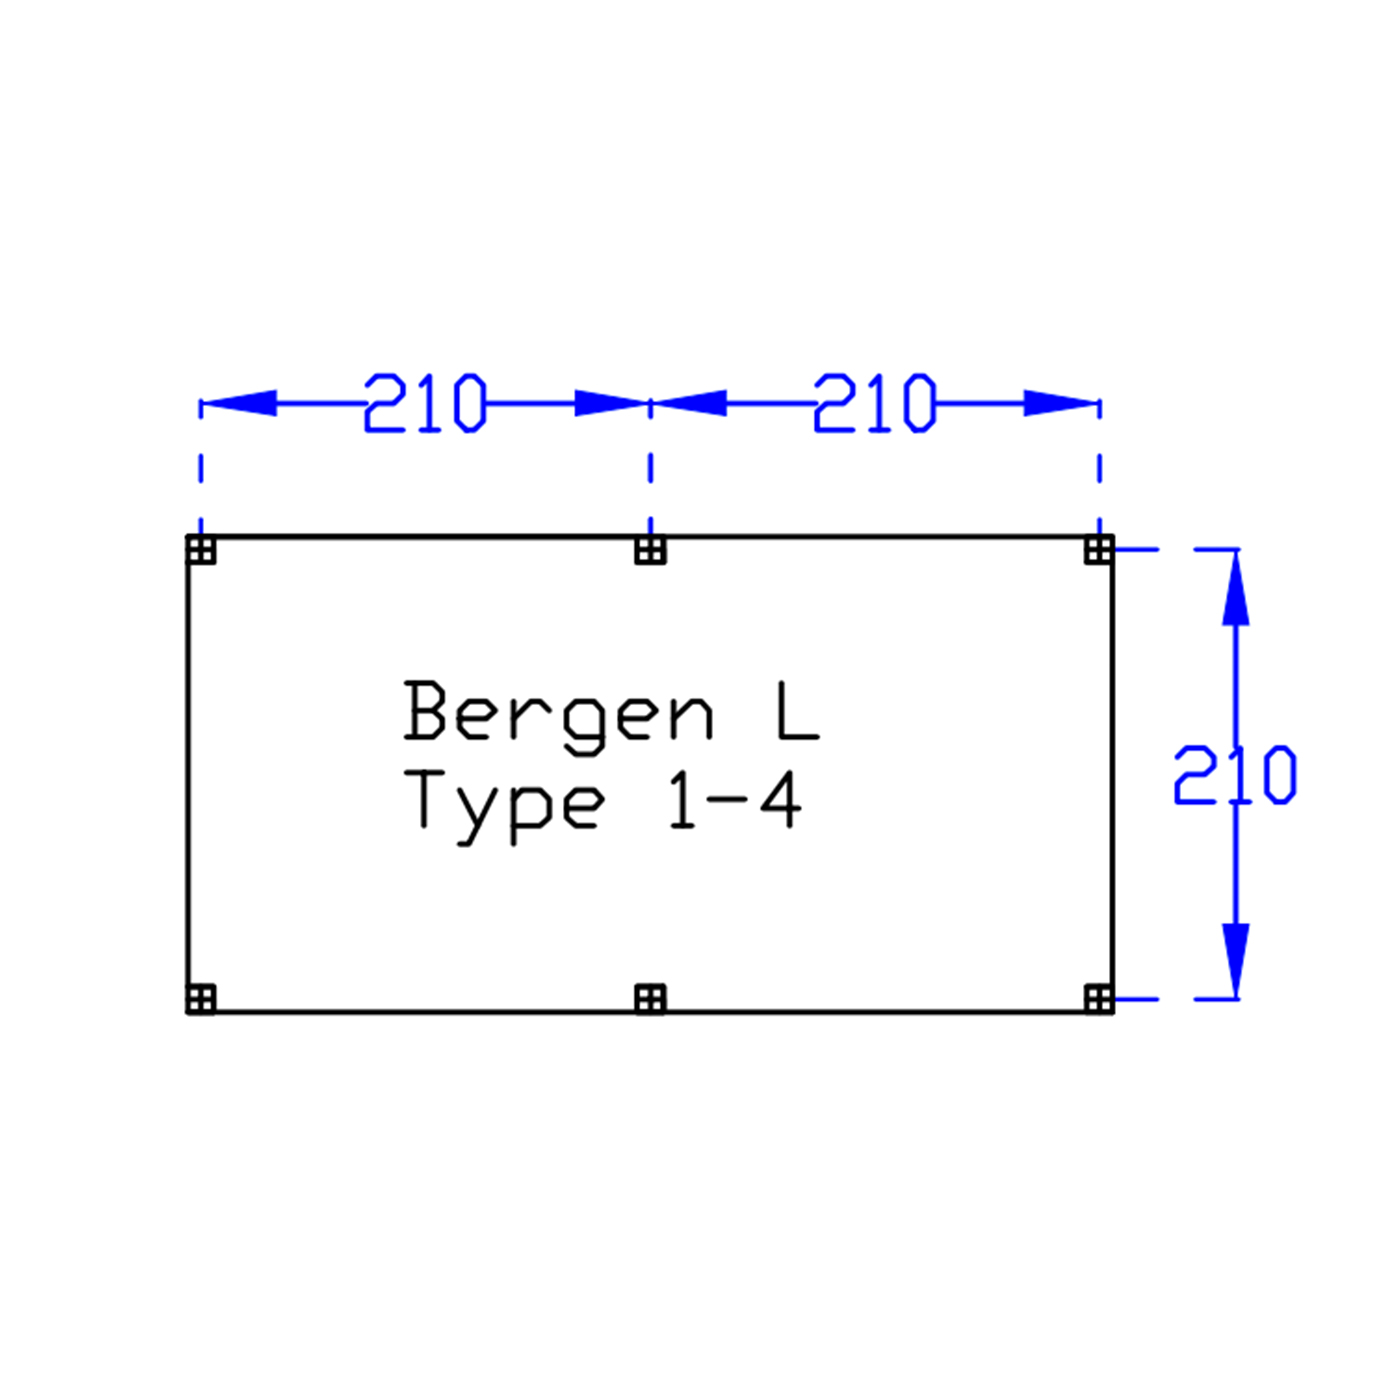 Bergen L type 1